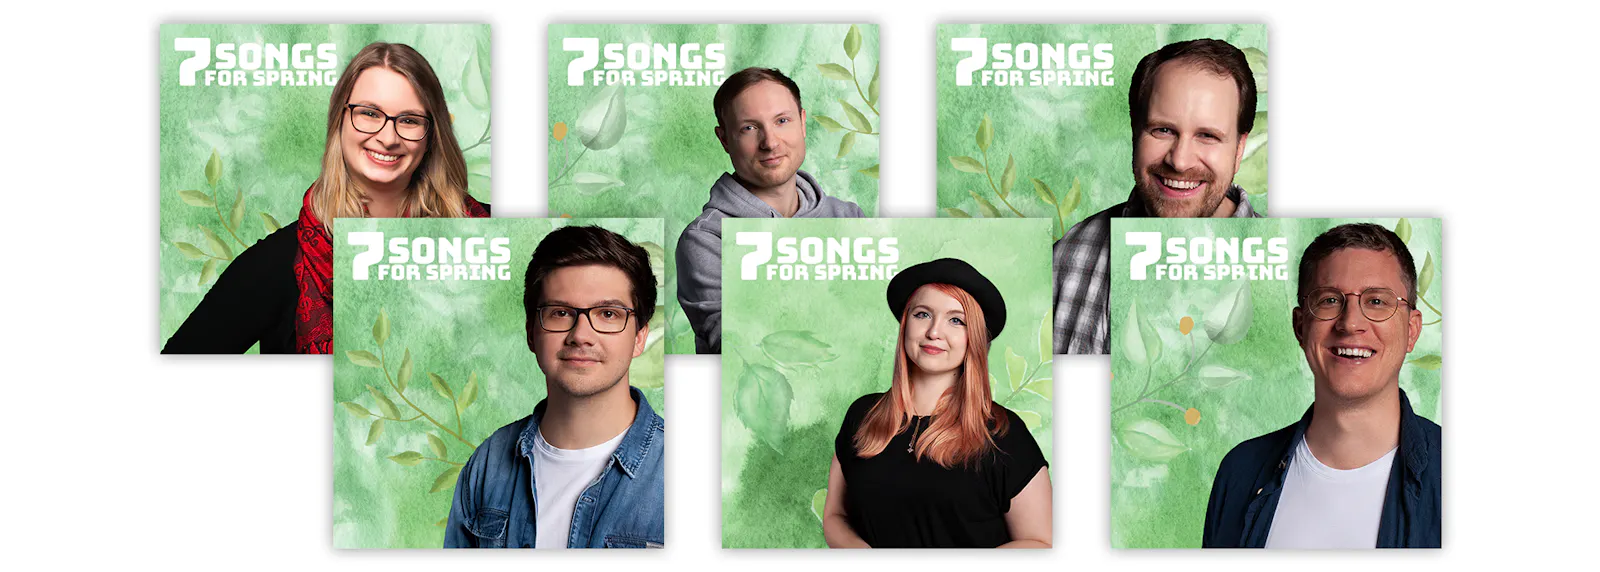 Zu unseren "7 Songs for Spring"-Playlists